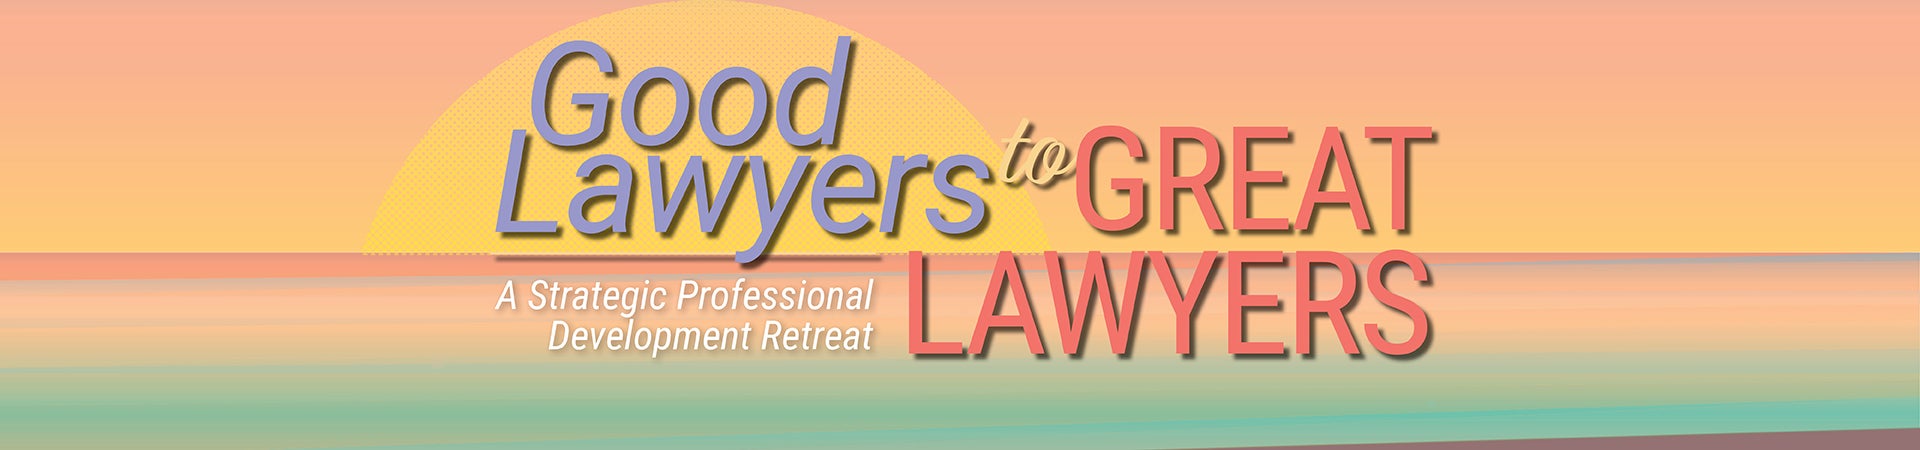 Good Lawyers to Great Lawyers A Strategic Professional Development Retreat